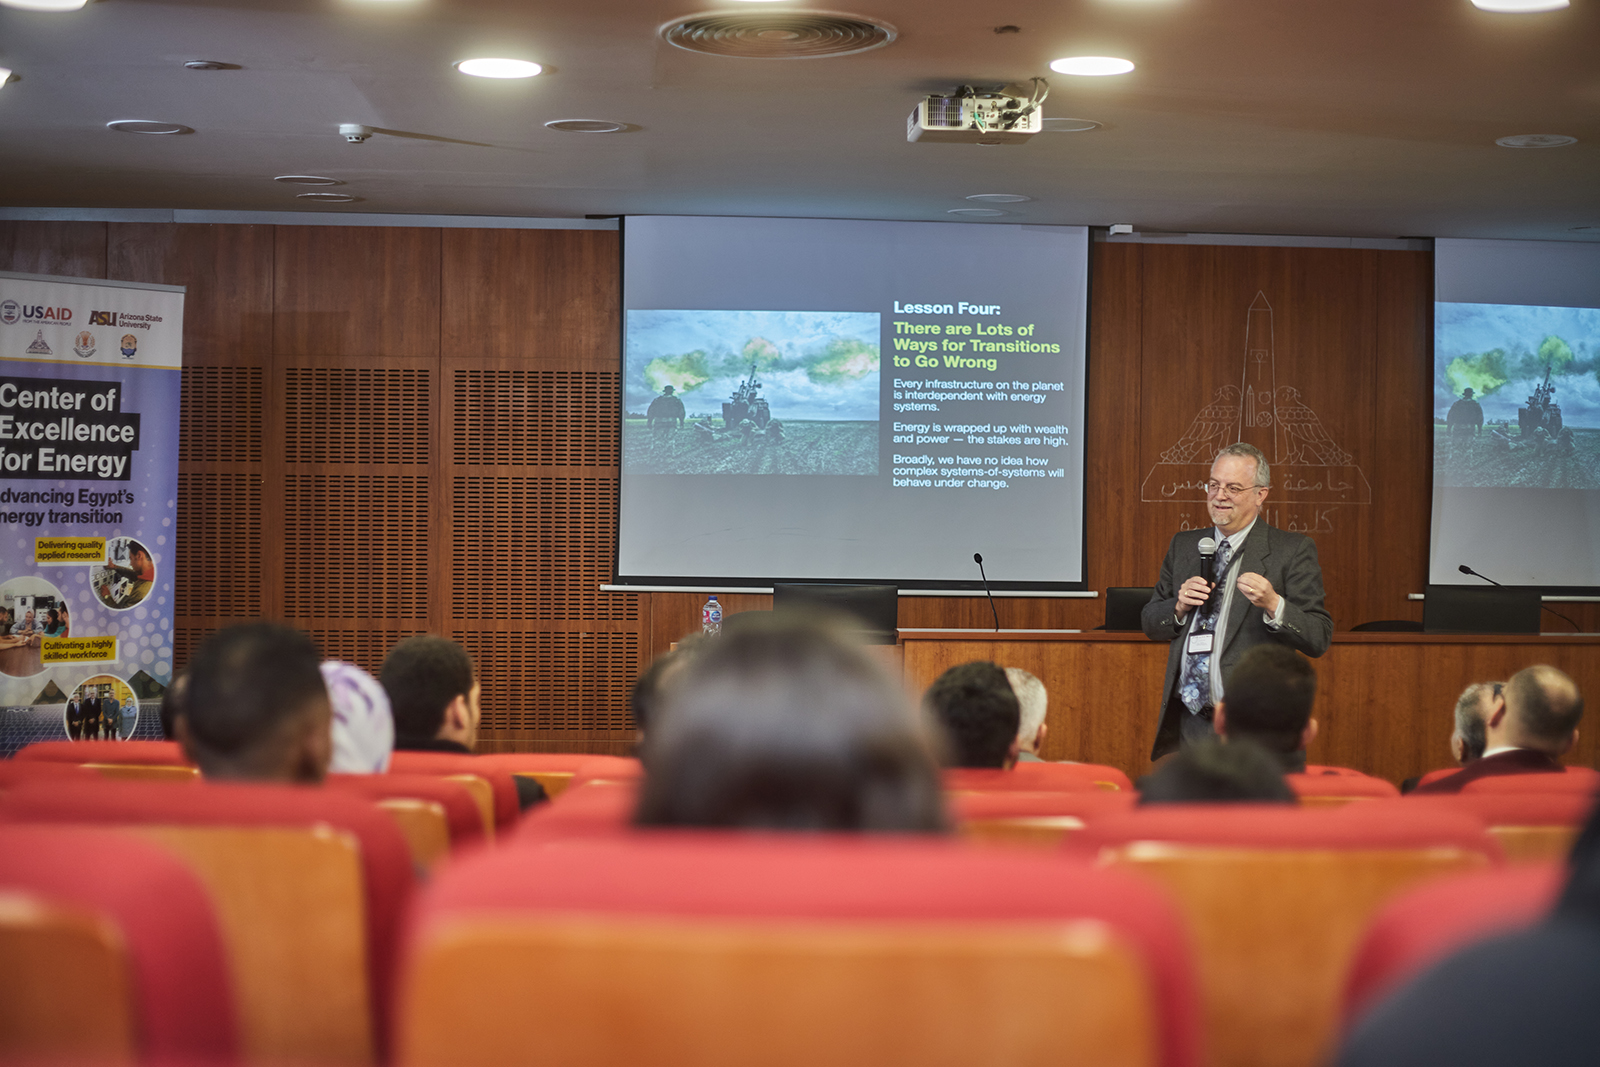 ASU-US professor giving a presentation